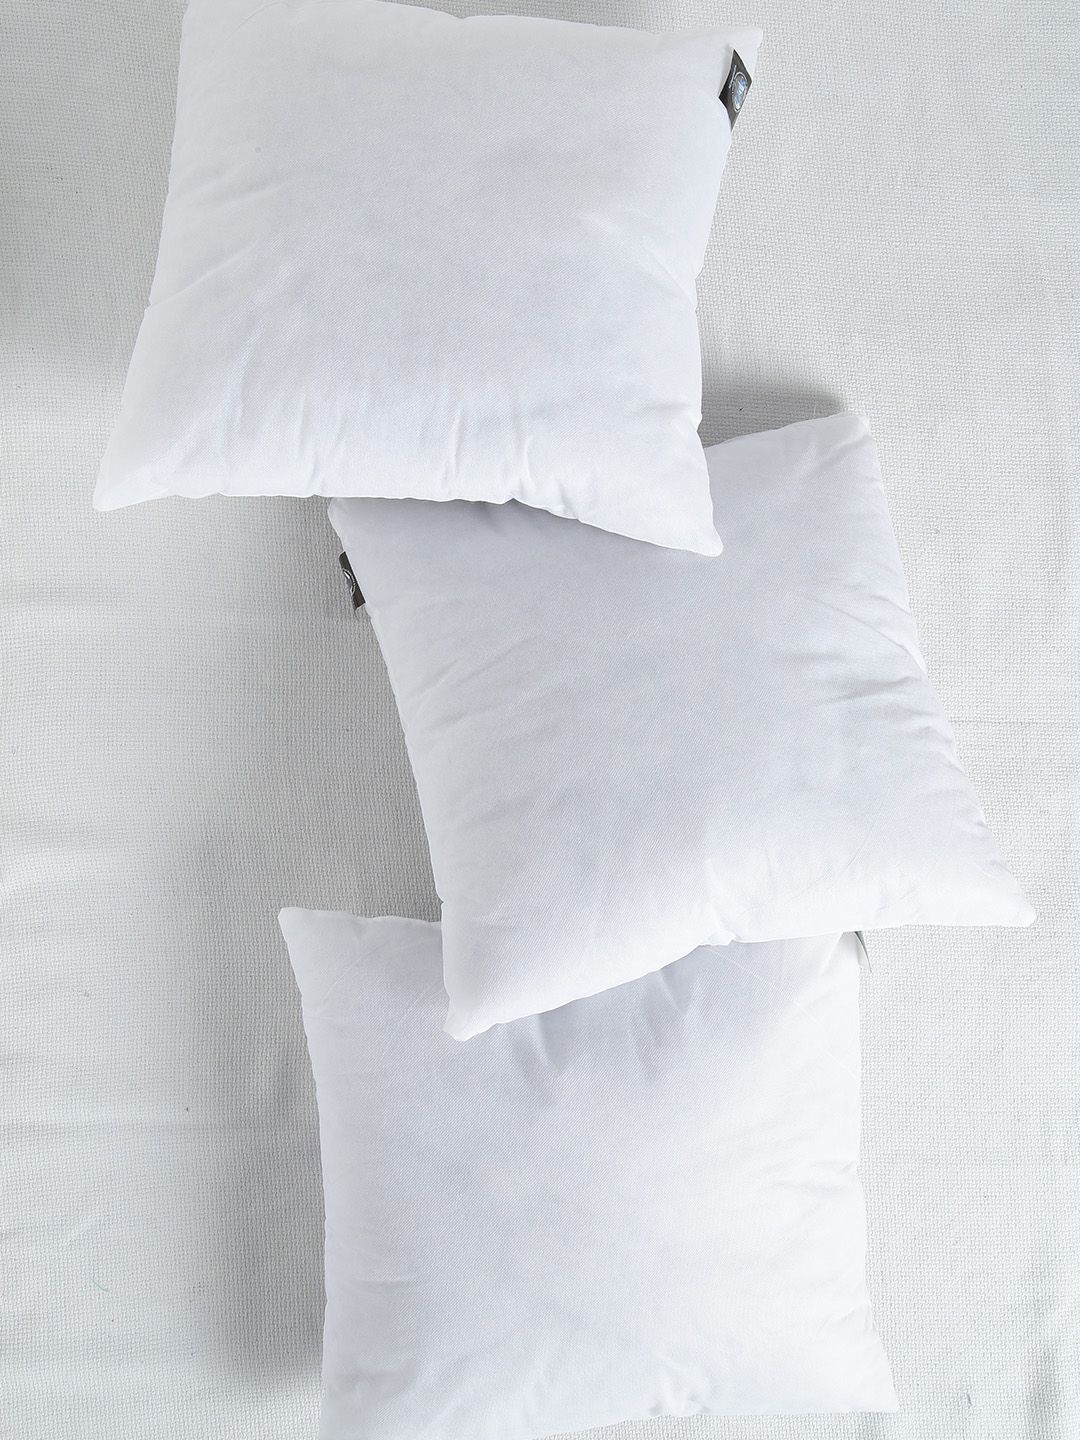 SWHF White Set of 3 Fibre 16'' x 16'' Square Cushions Price in India